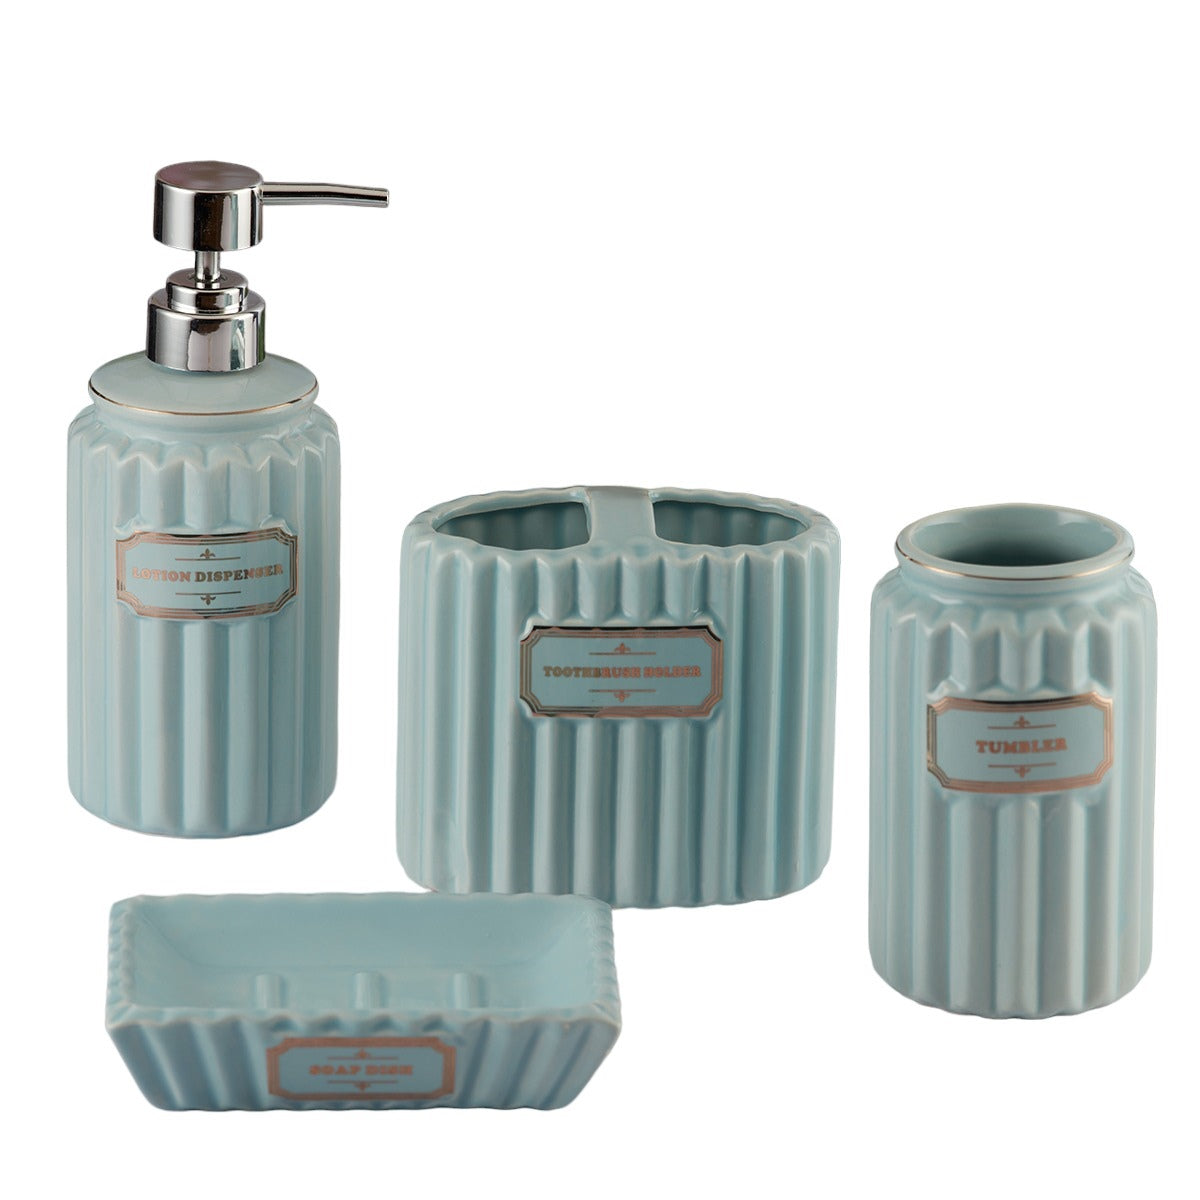 Ceramic Bathroom Accessories Set of 4 Bath Set with Soap Dispenser (8184)